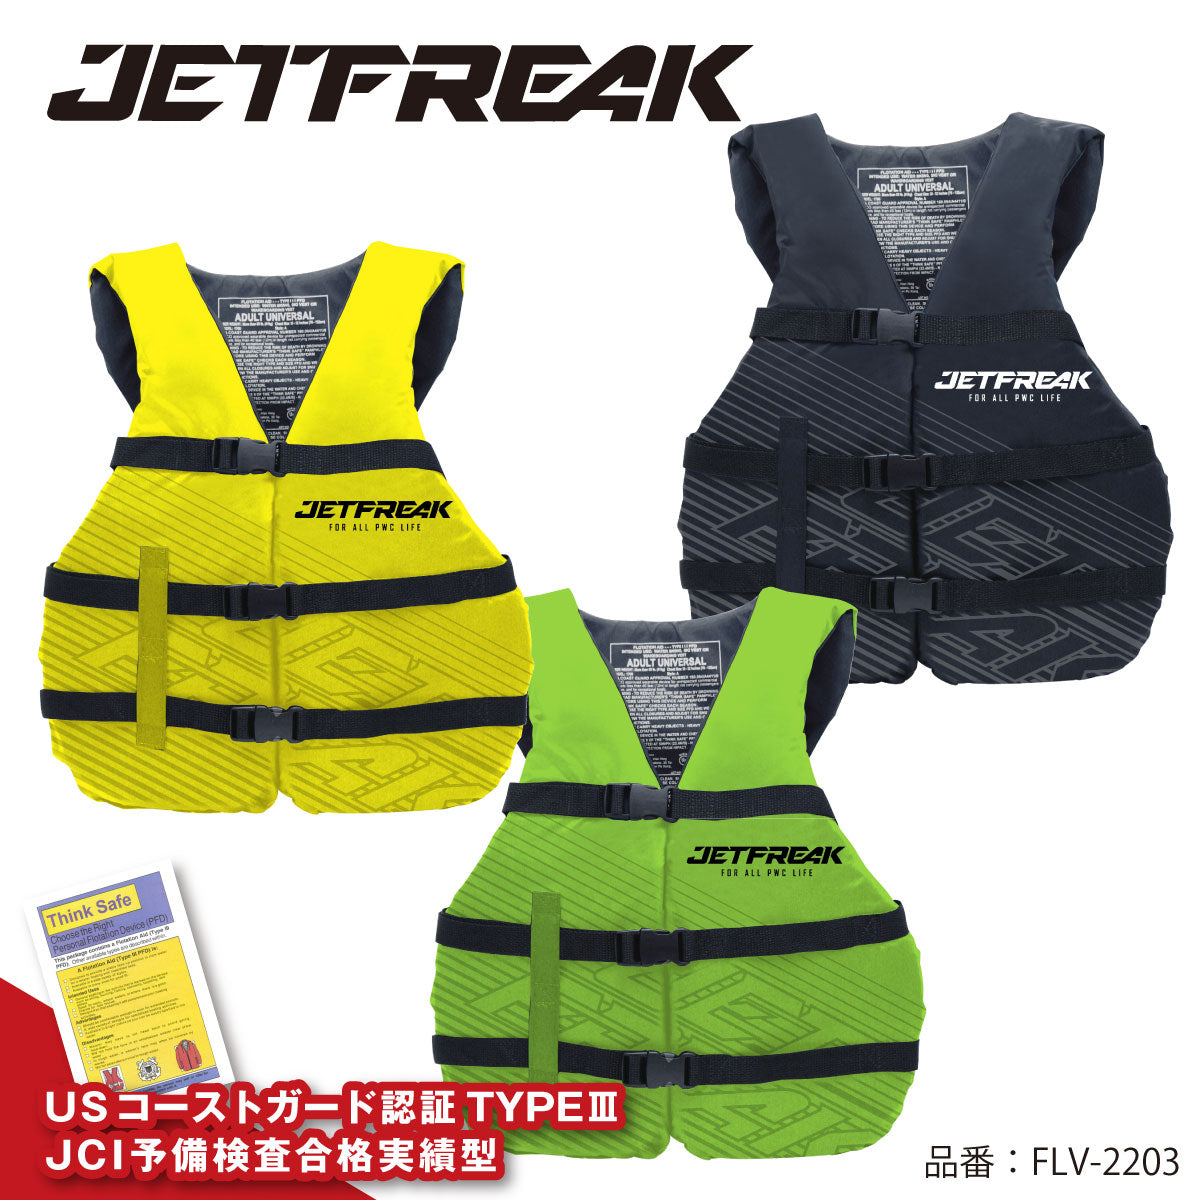 JETFREAK Life Jacket BATTEREFLY VEST Simple Type Jet Ski Water Bike Life Jacket Black FLV-2203